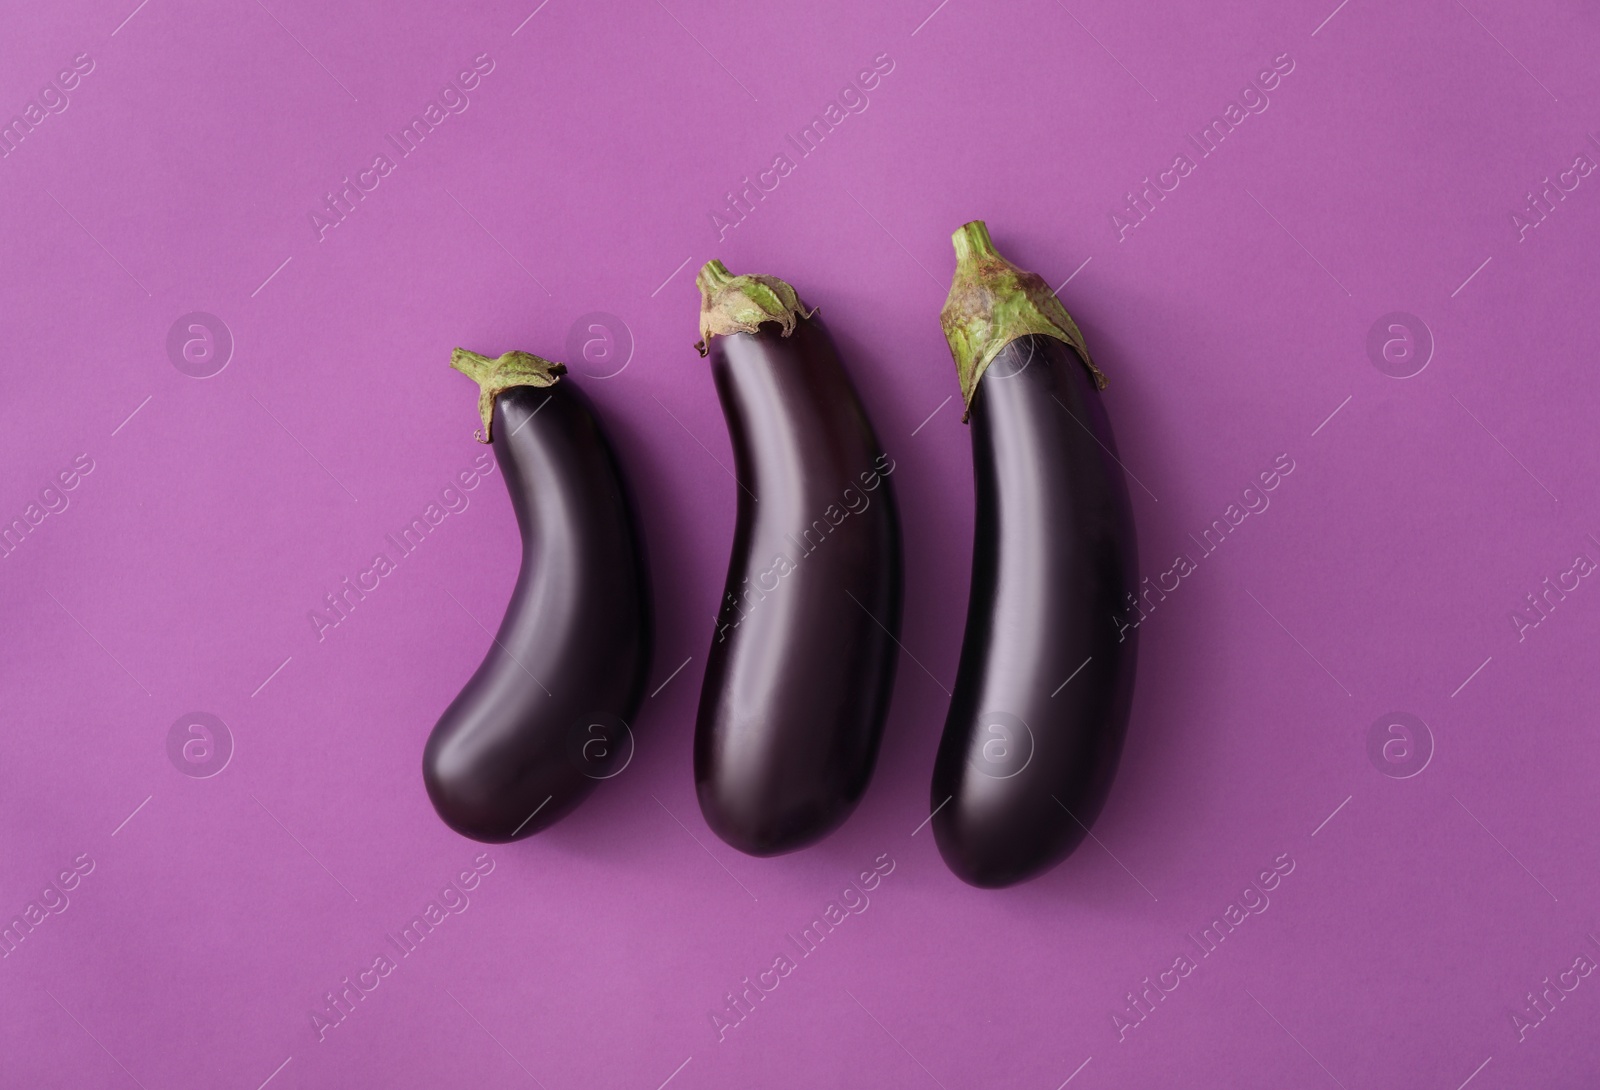 Photo of Raw ripe eggplants on purple background, flat lay